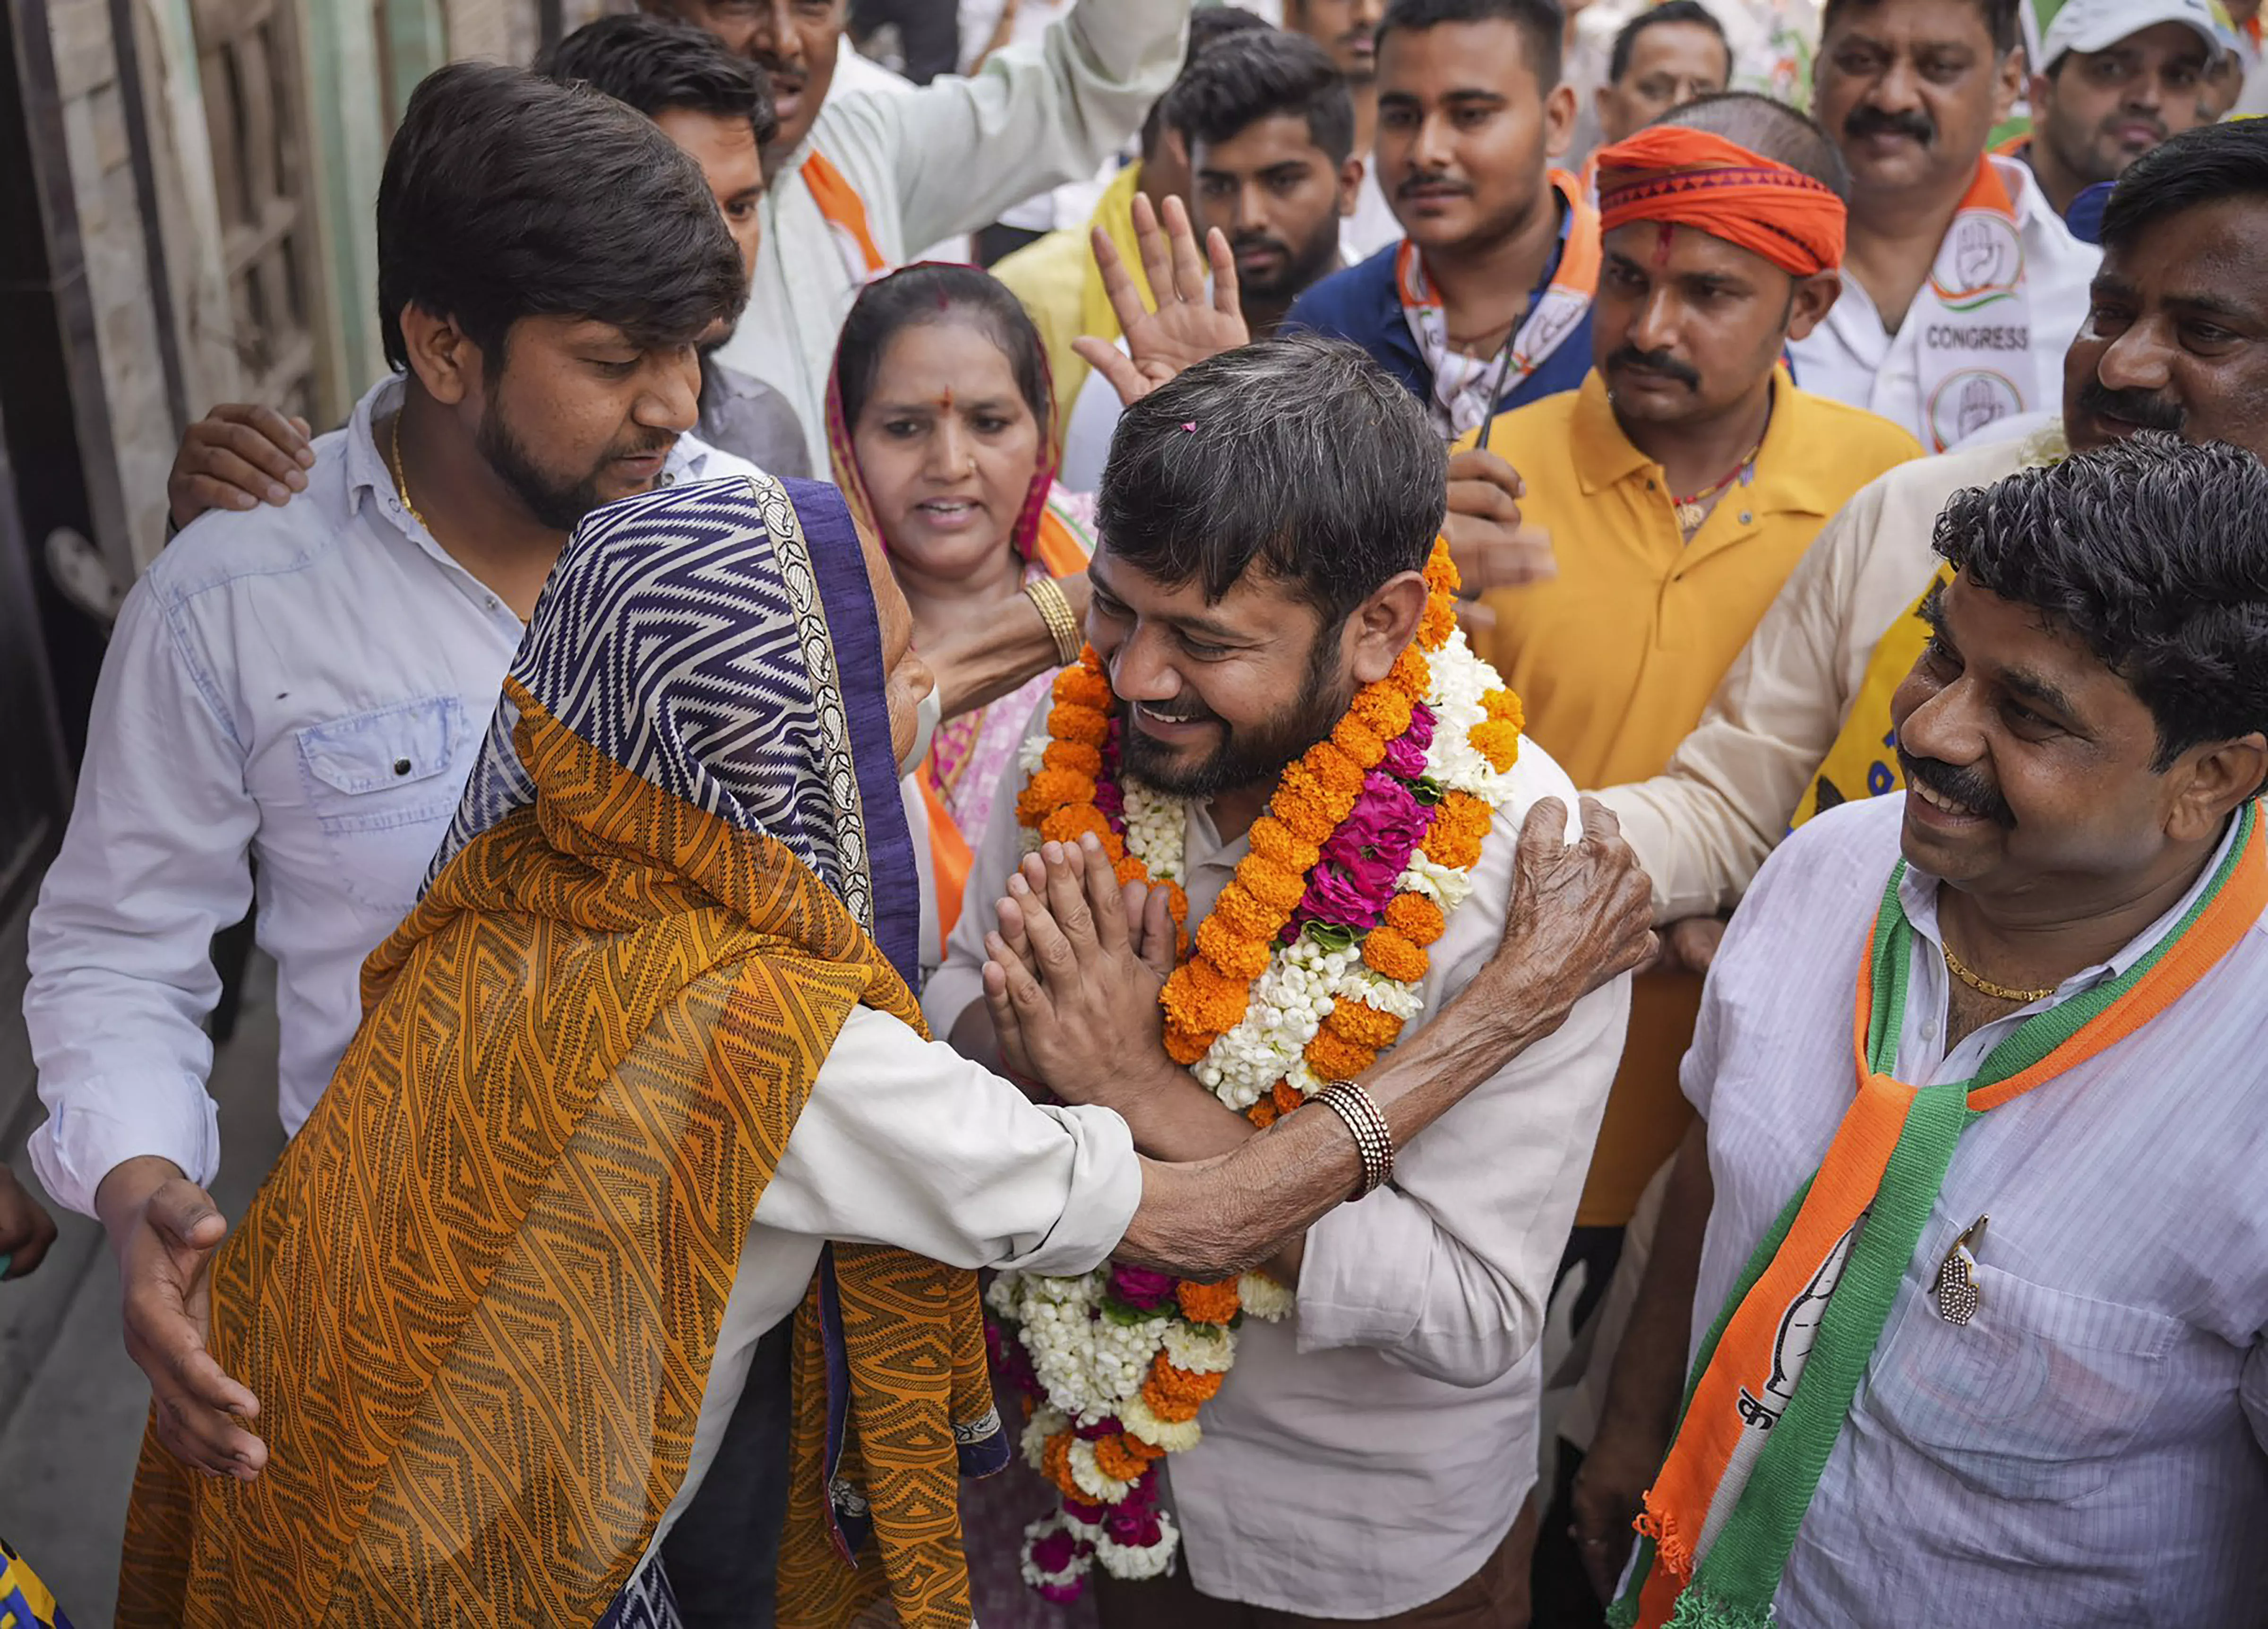 Congress candidate Kanhaiya Kumar assaulted while campaigning in Delhi